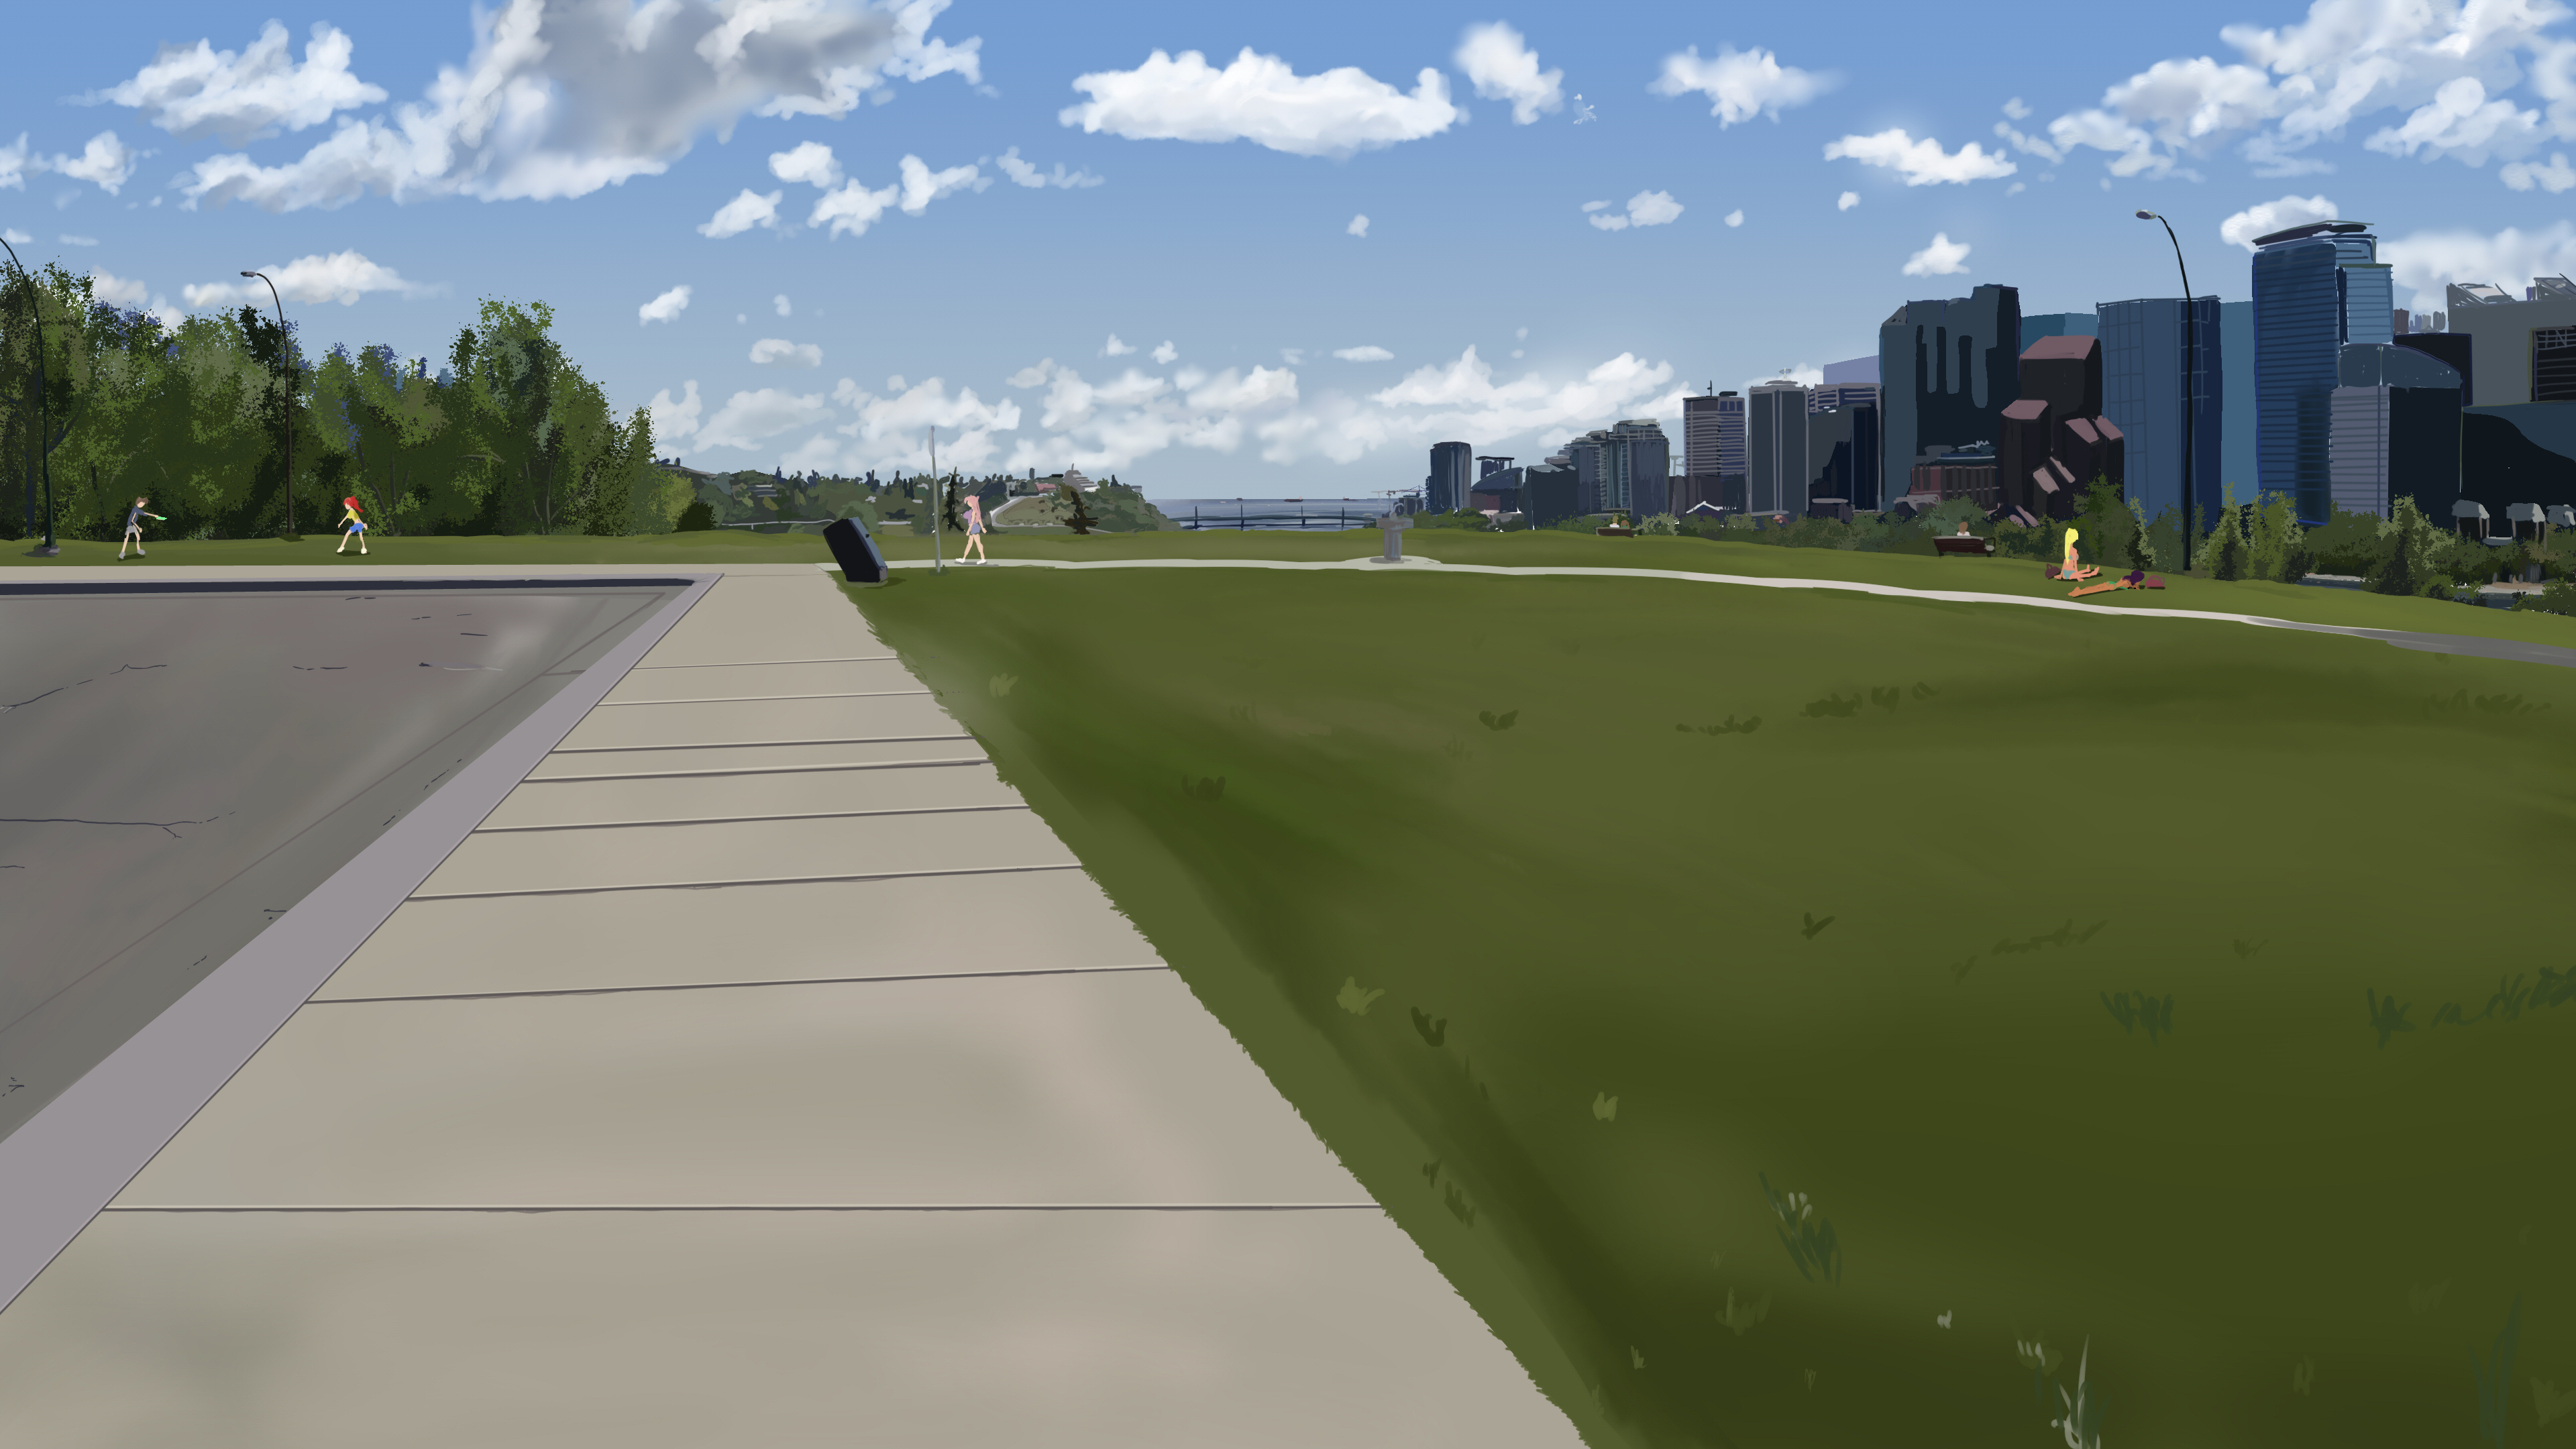 Anime Style Hillside Park Background by wbd on DeviantArt